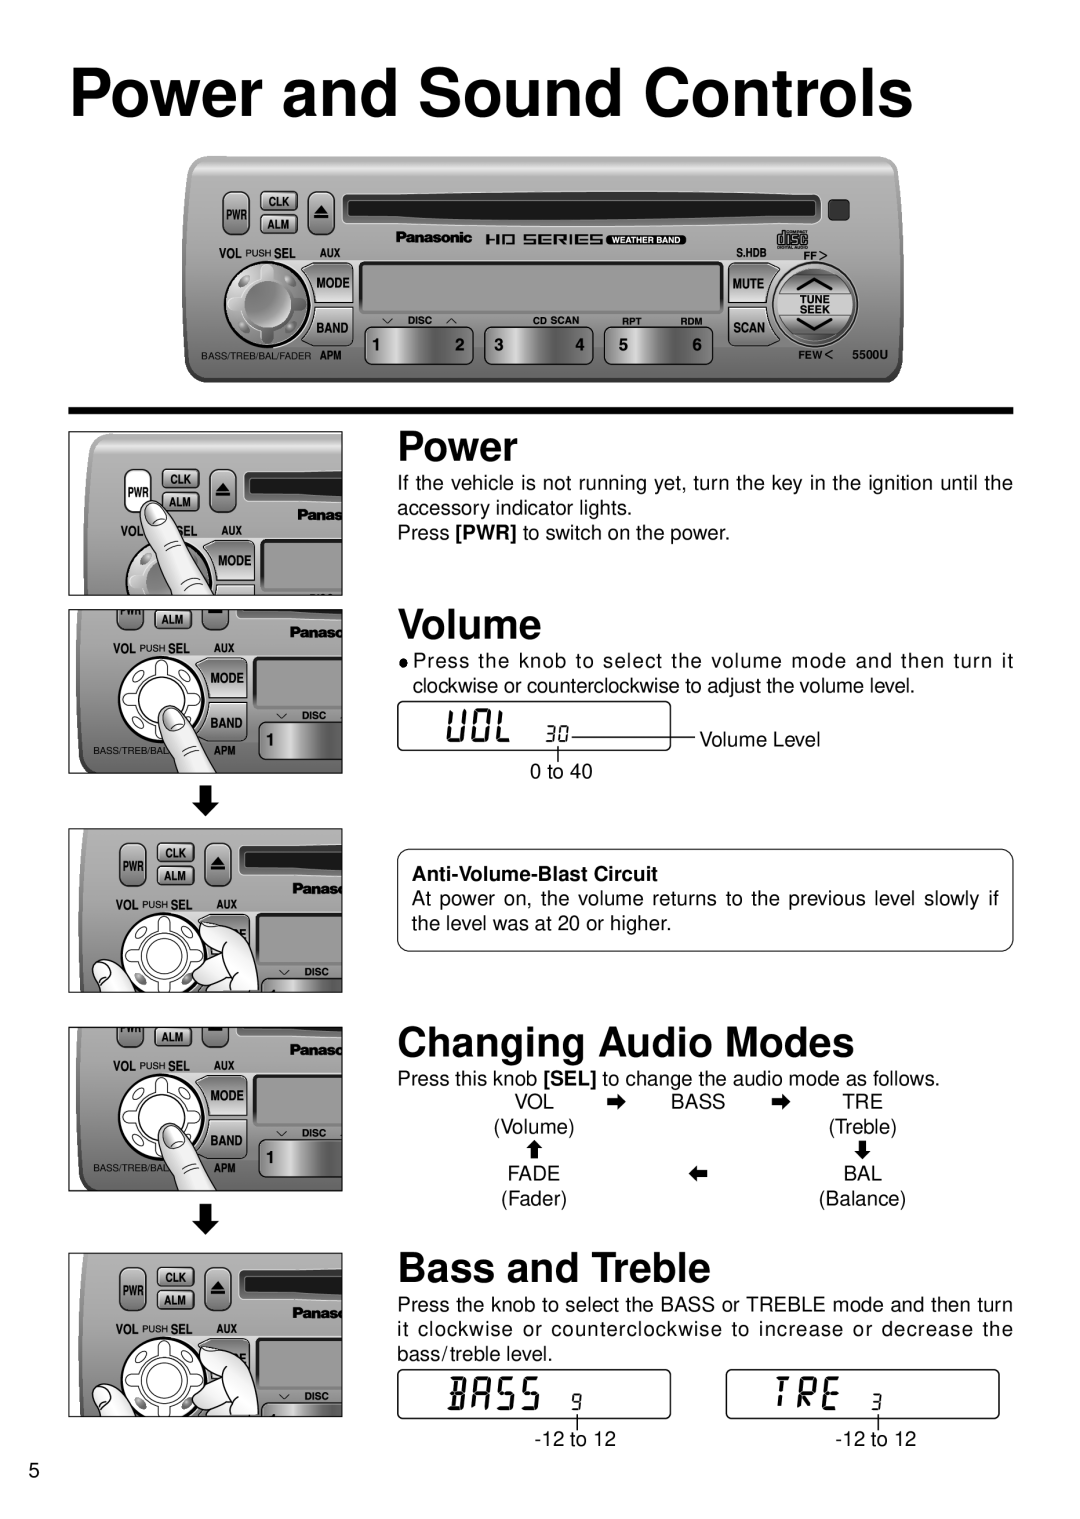 Panasonic CQ-5500U, 5300U manual Power and Sound Controls, Volume, Changing Audio Modes, Bass and Treble 